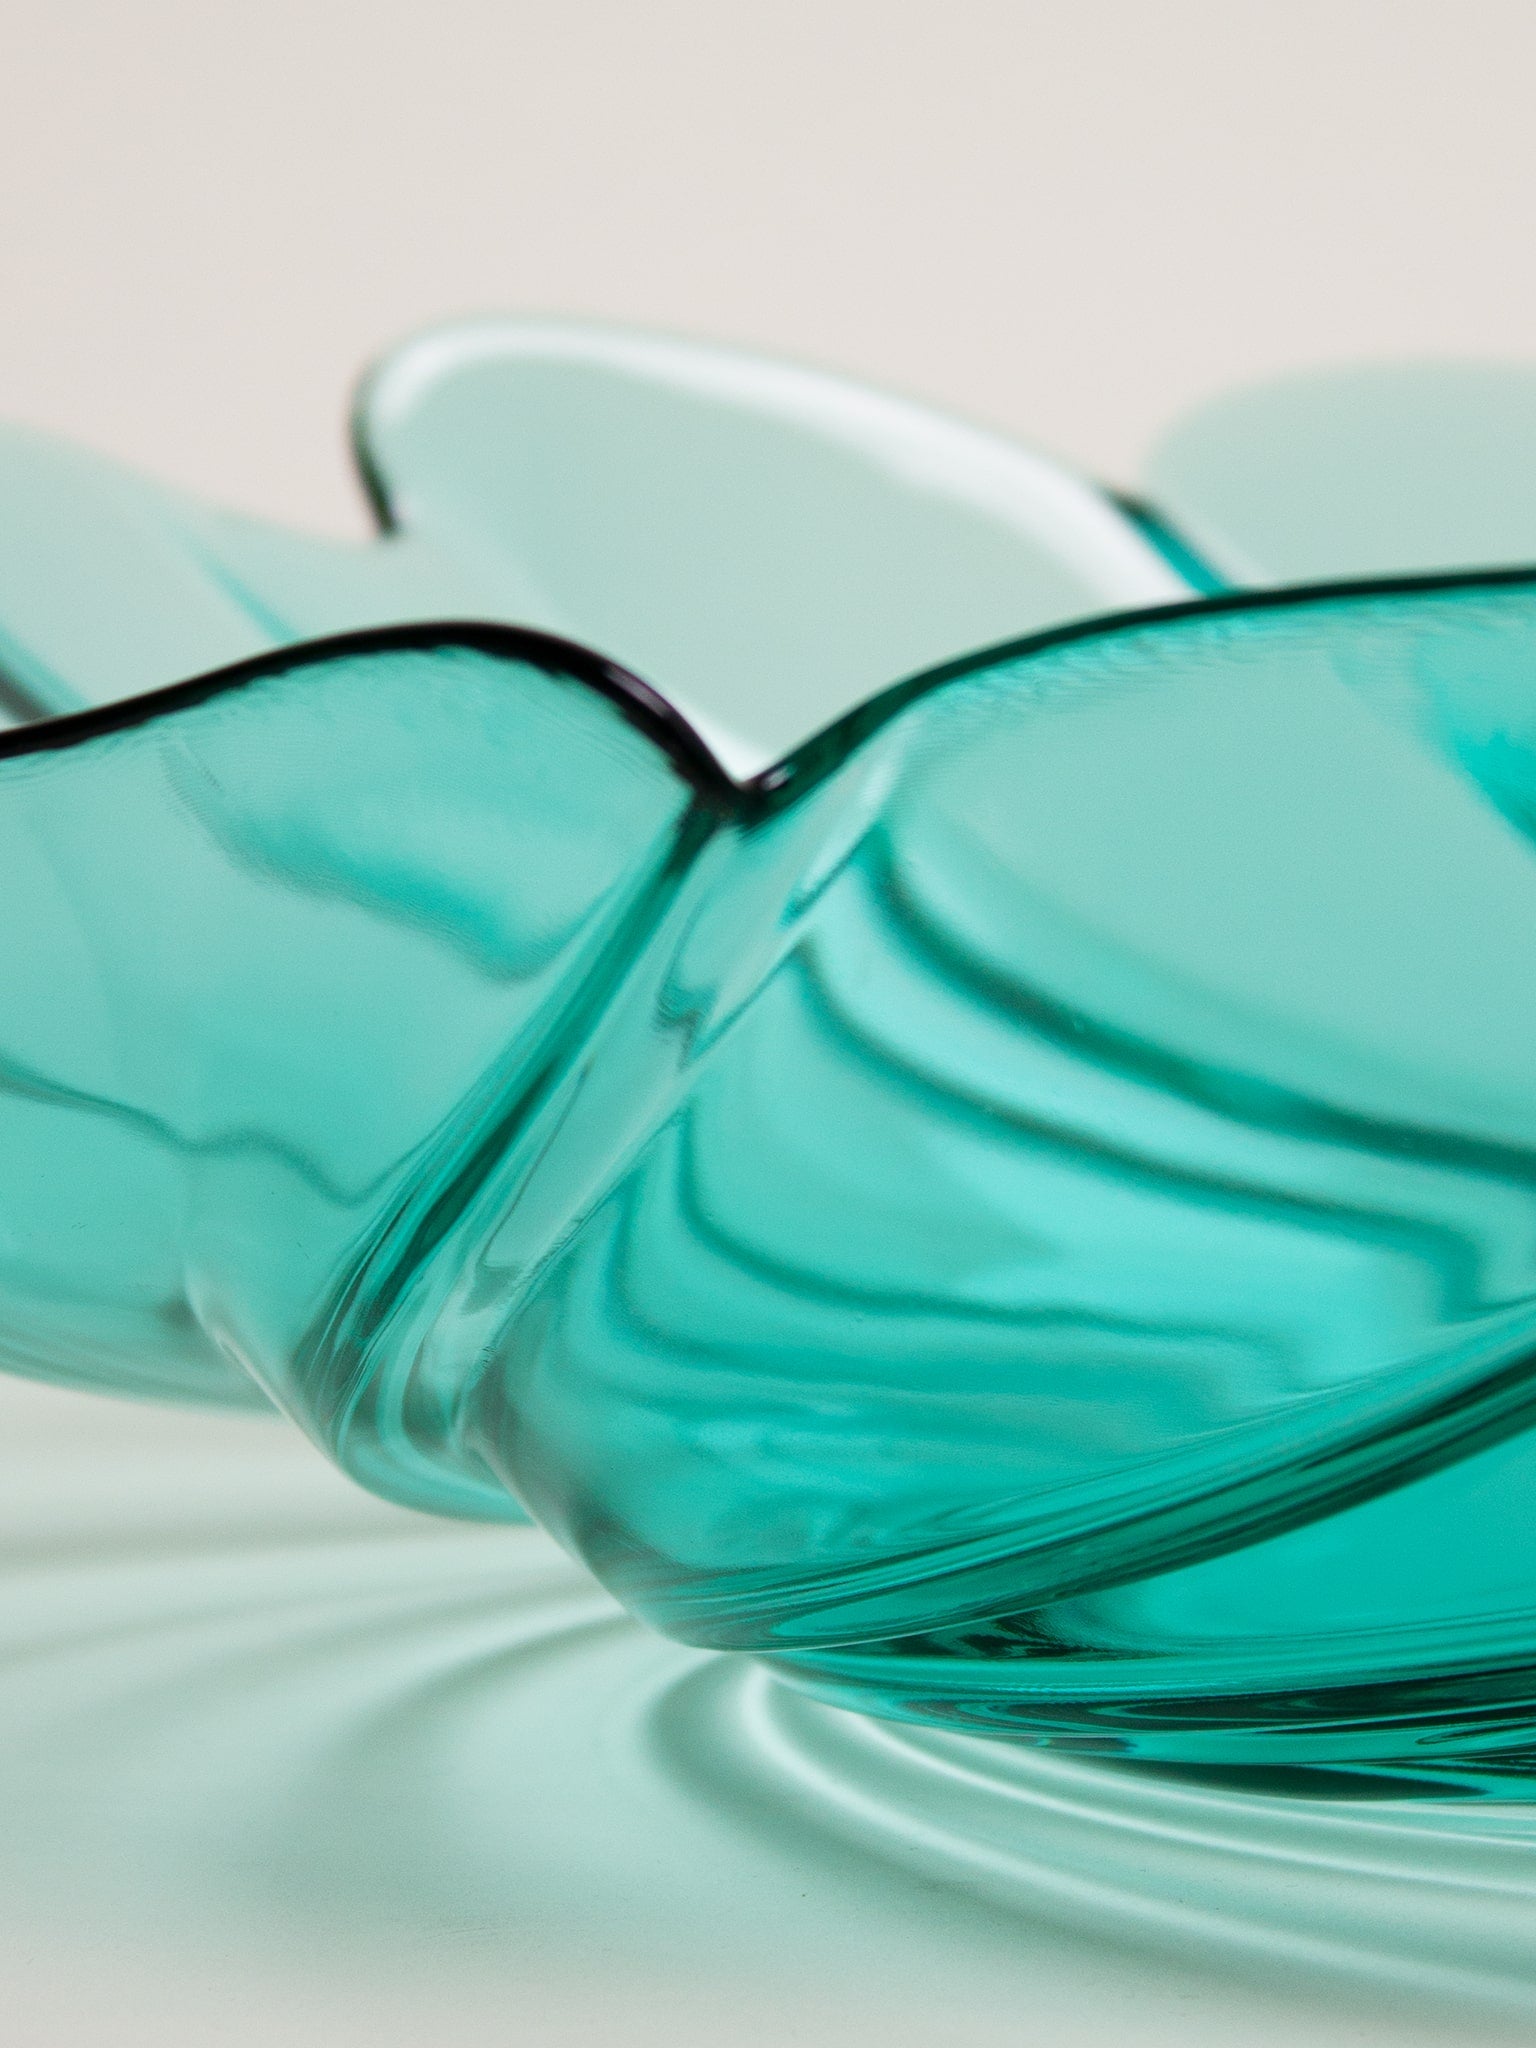 La Loueme aqua swirl bowl glass